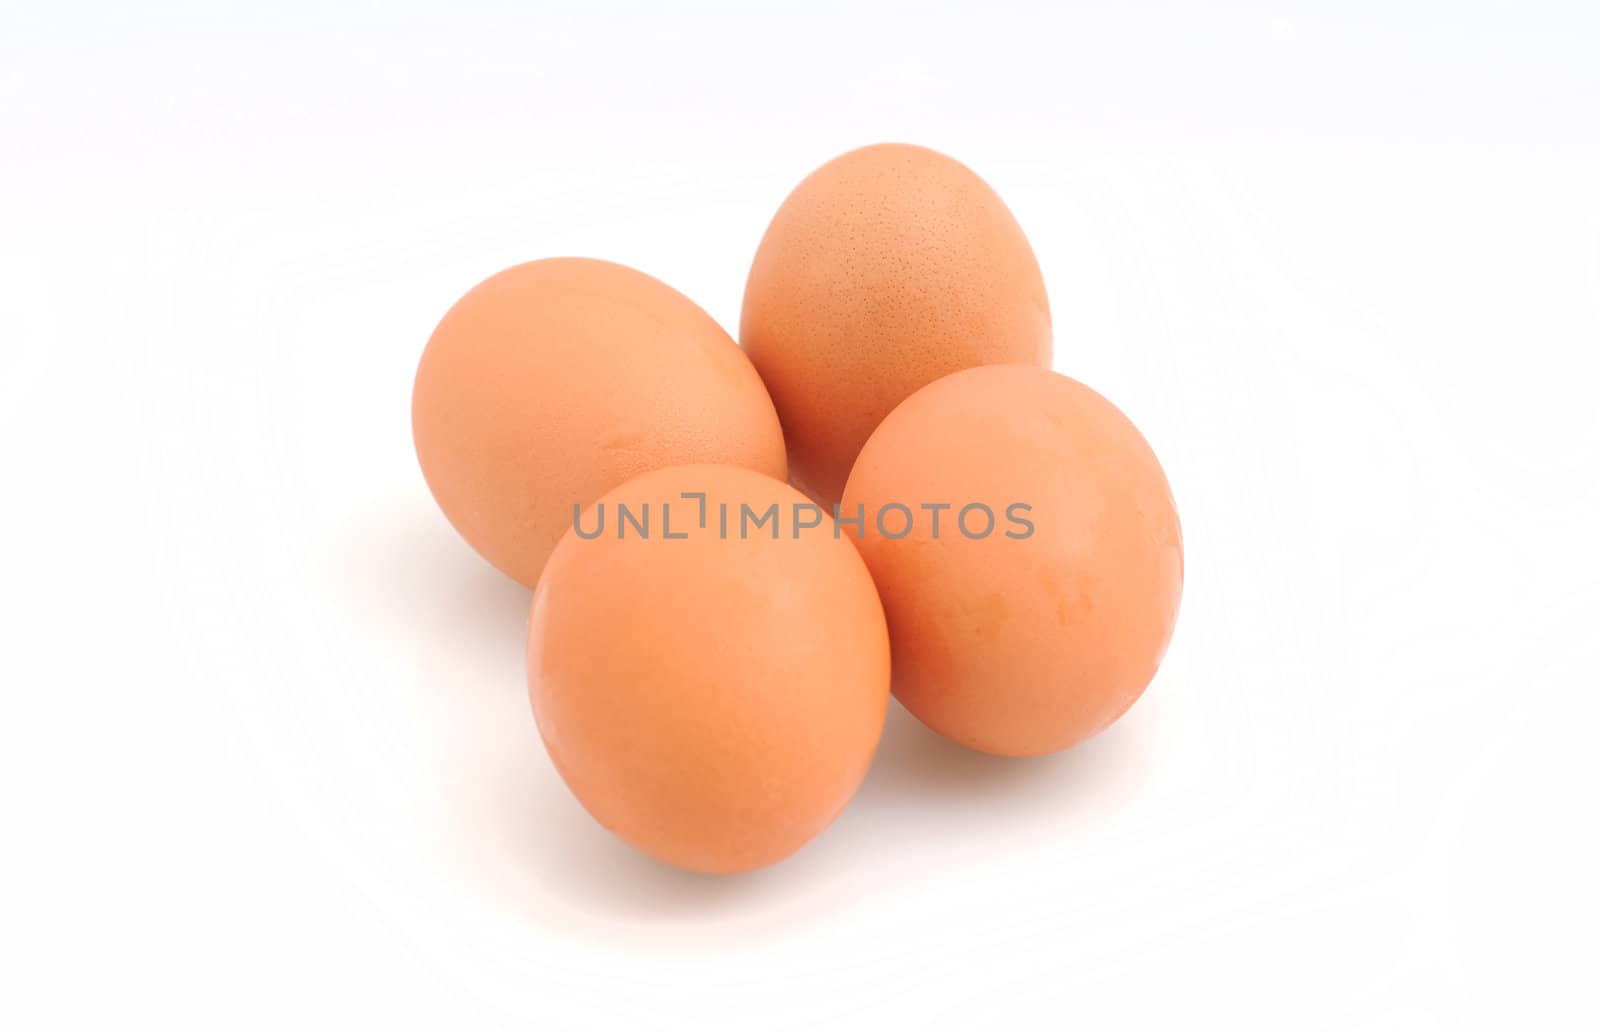 Four organic brown eggs by ftlaudgirl